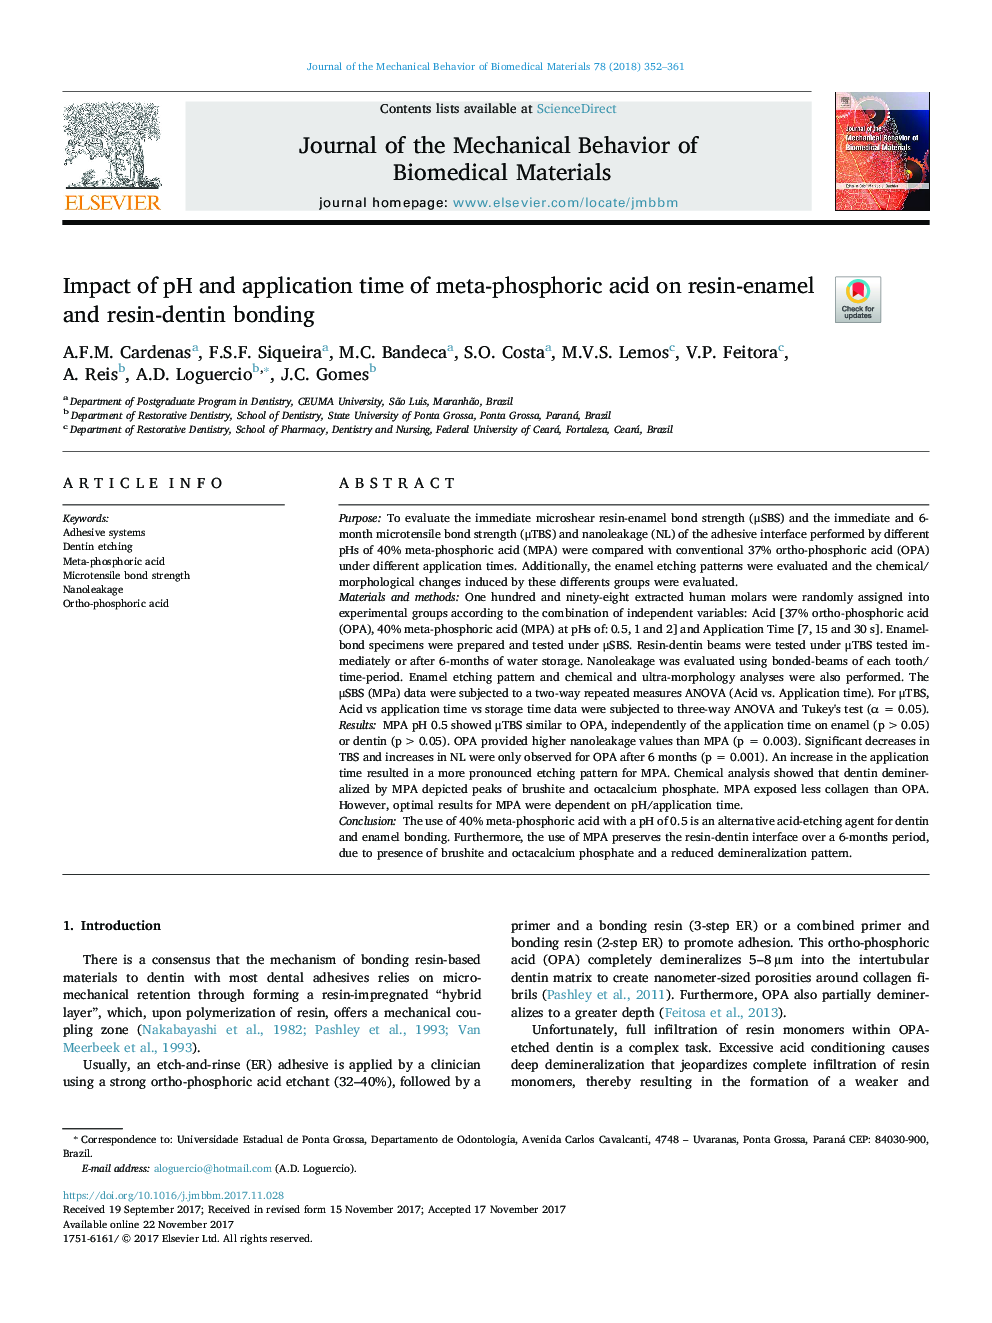 Impact of pH and application time of meta-phosphoric acid on resin-enamel and resin-dentin bonding